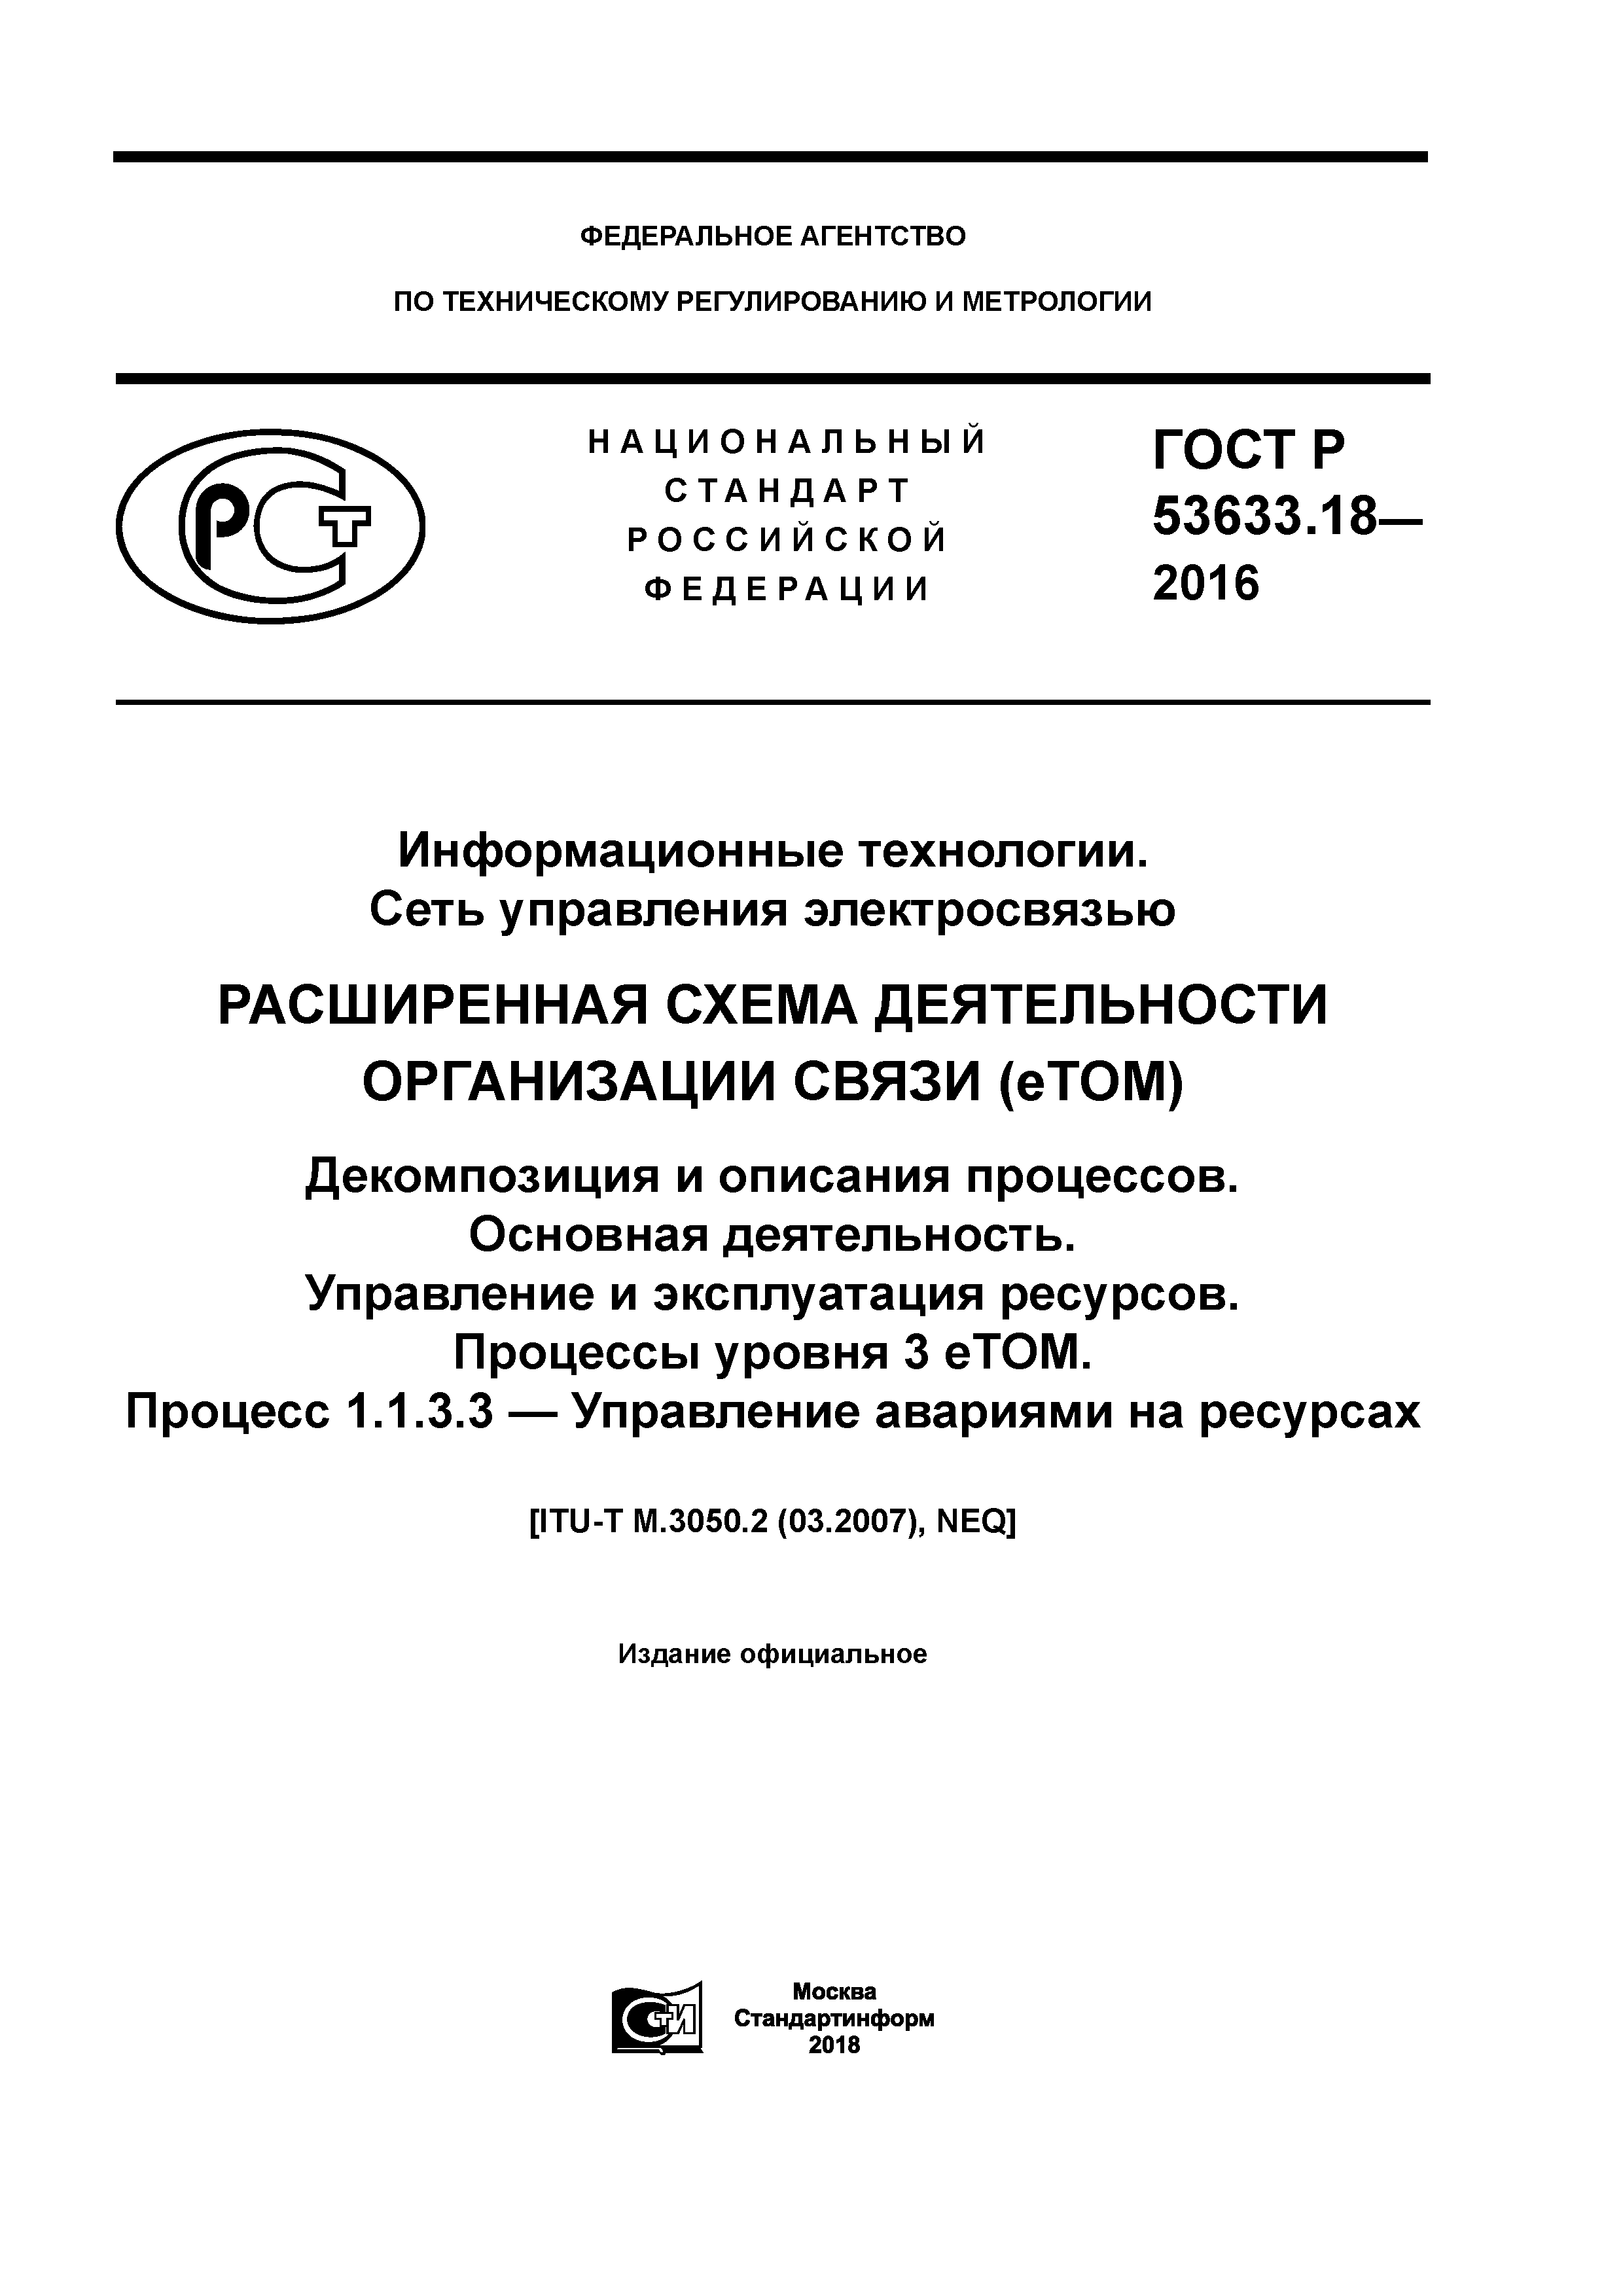 ГОСТ Р 53633.18-2016